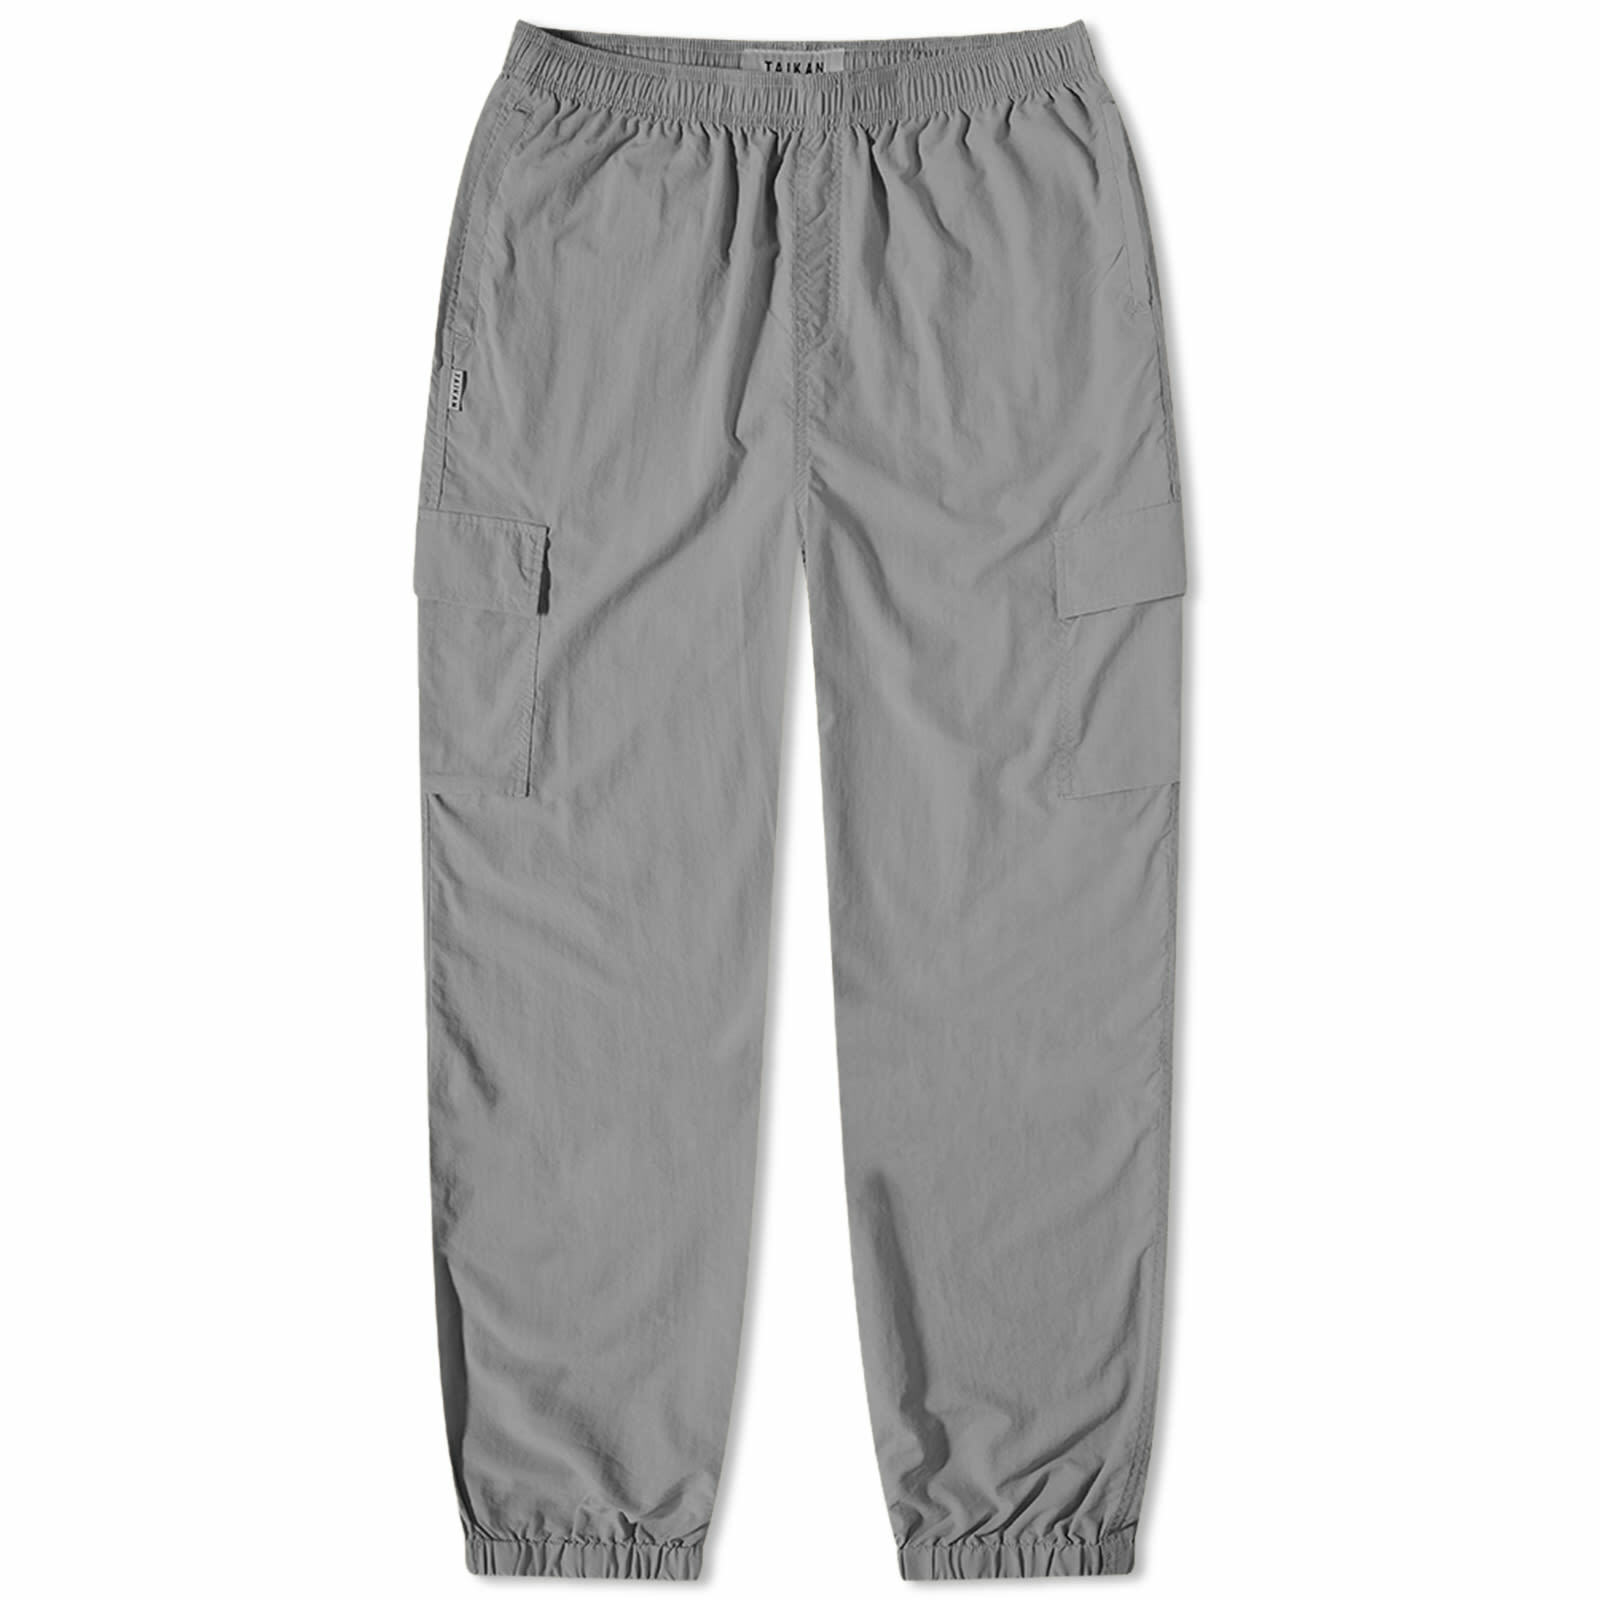 Taikan Men's Nylon Cargo Pants in Grey Taikan